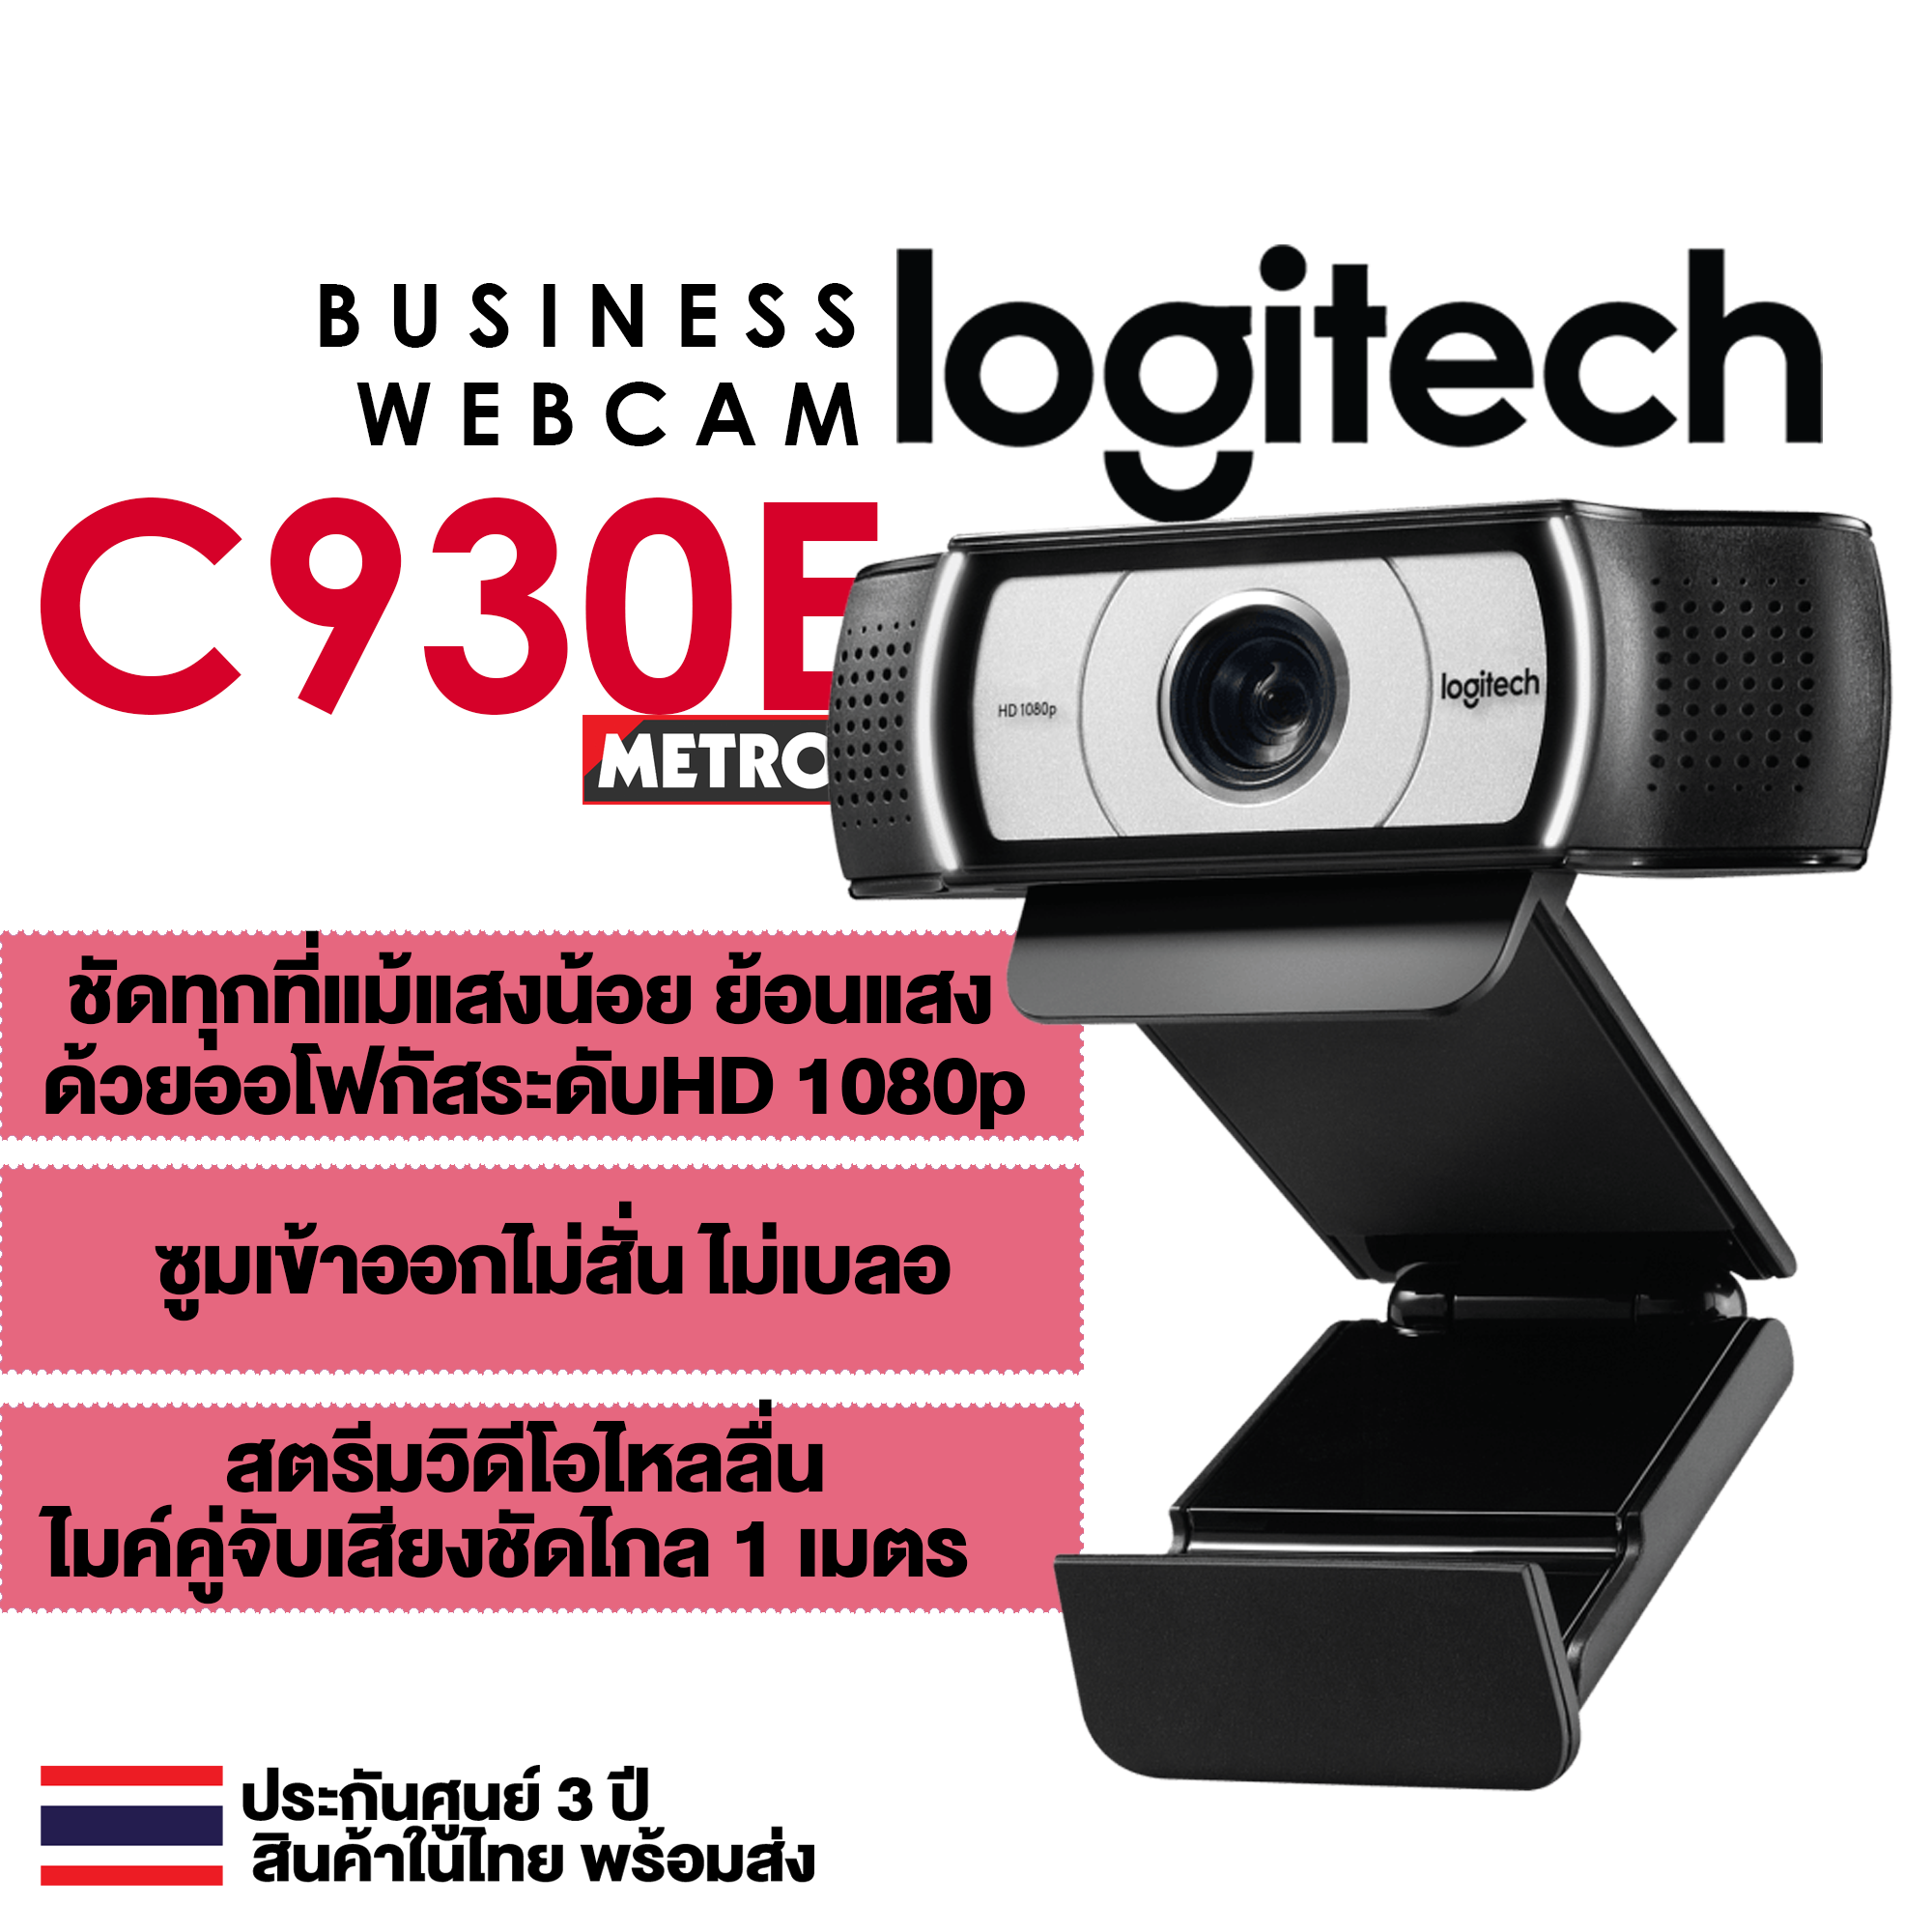 LOGITECH C930e Logitech Webcam Logitech Business Webcam โลจิเทค กล้องเวปแคม ประกันศูนย์ Logitech 3 ปี Presented by METRO MET5